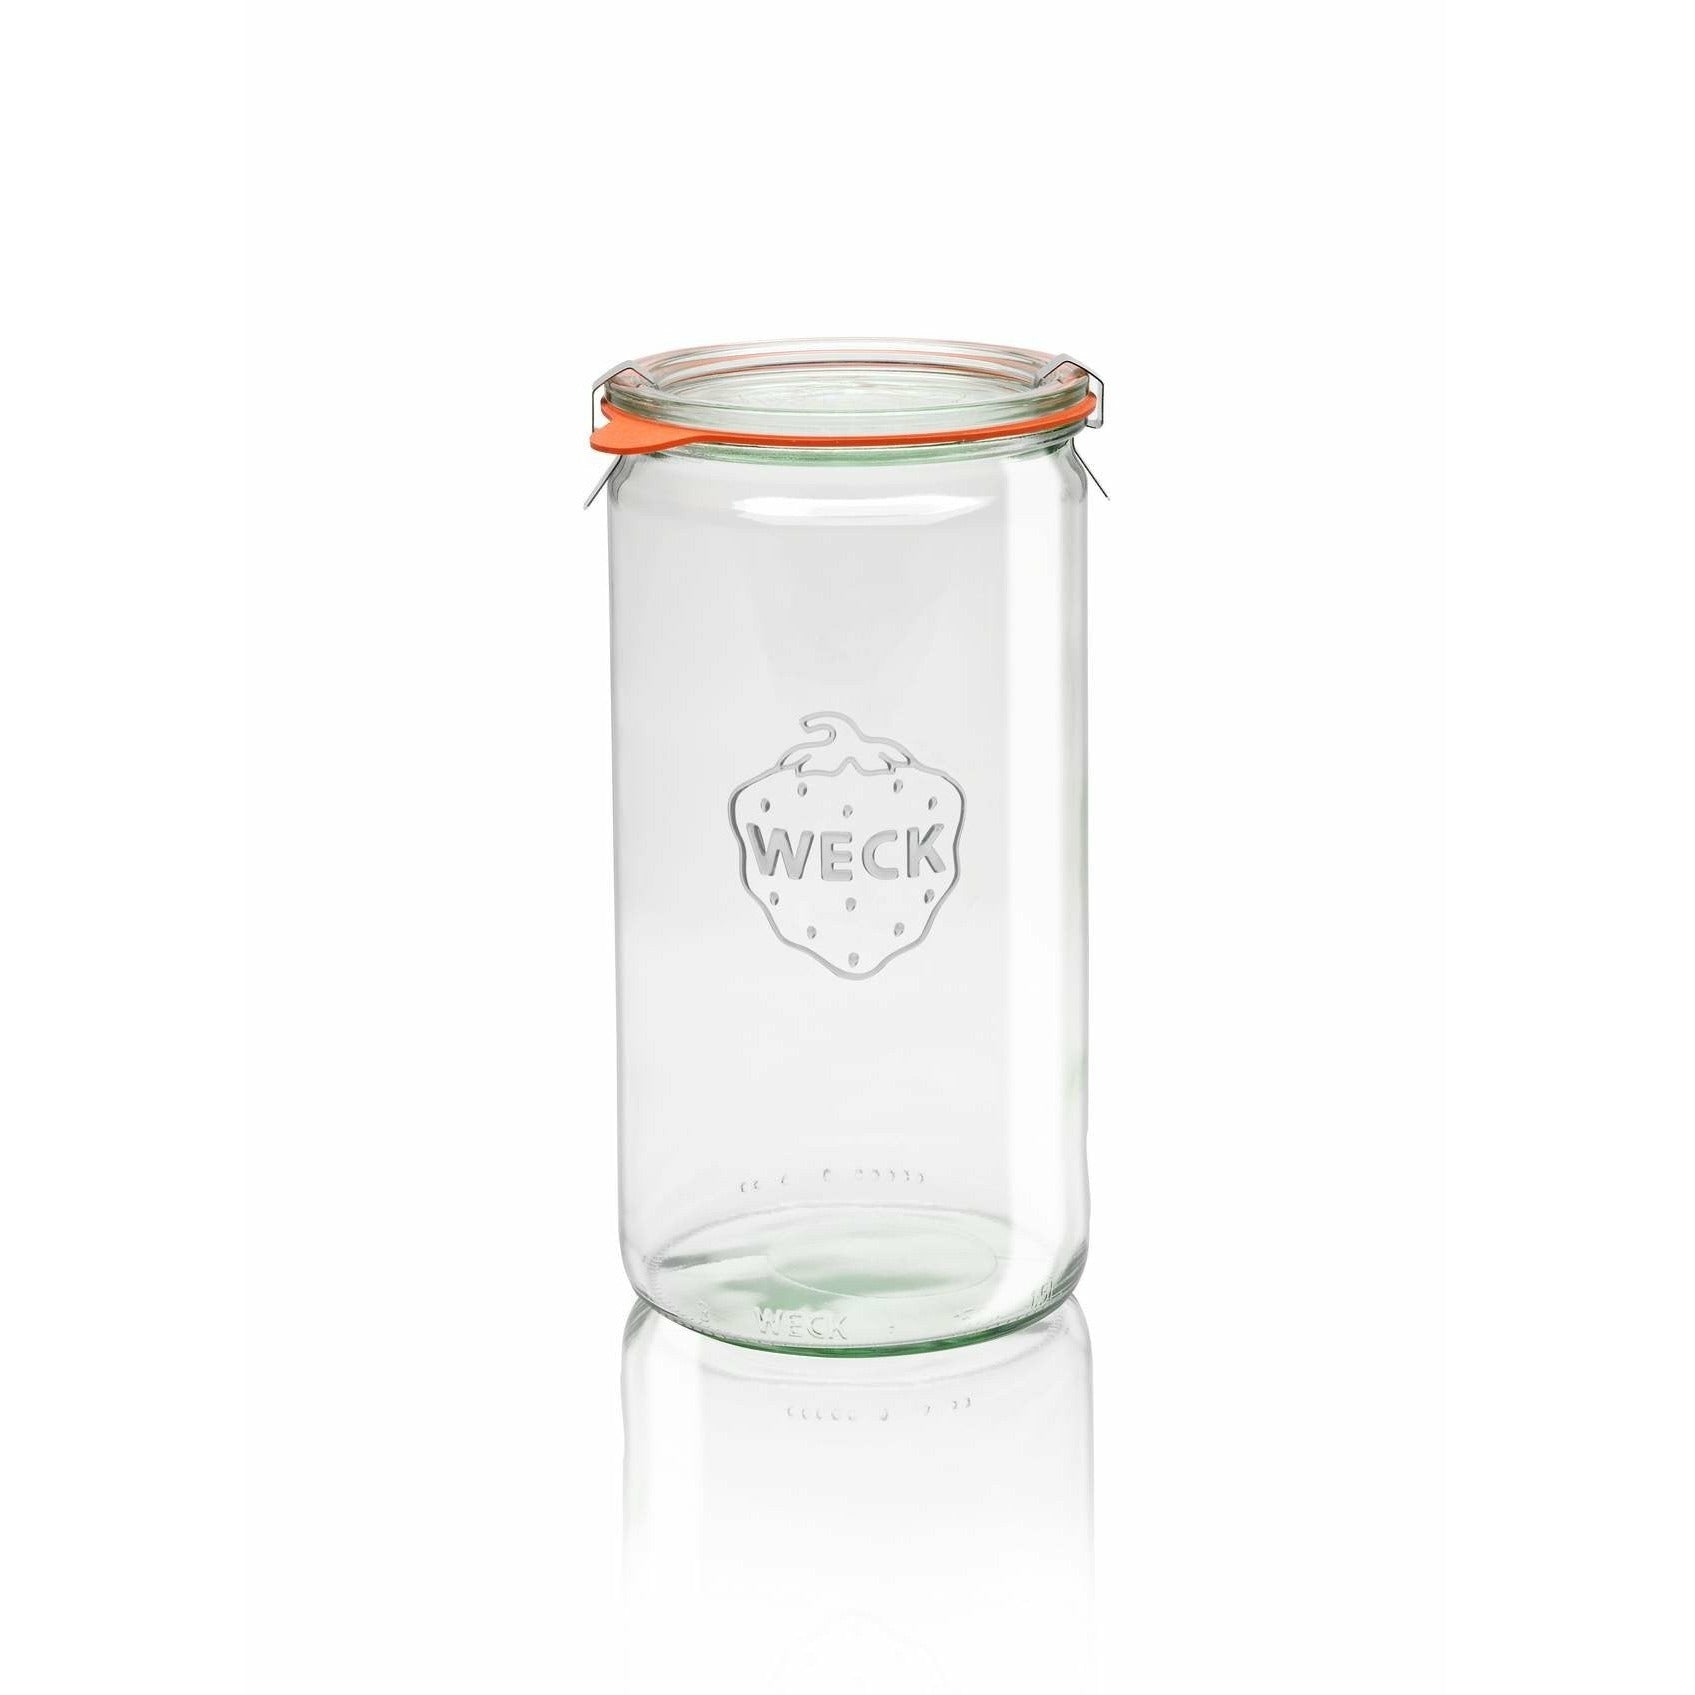 Weck Weck Jars - 974 Cylindrical 1590ml Case of 2 - KitchenEnvy